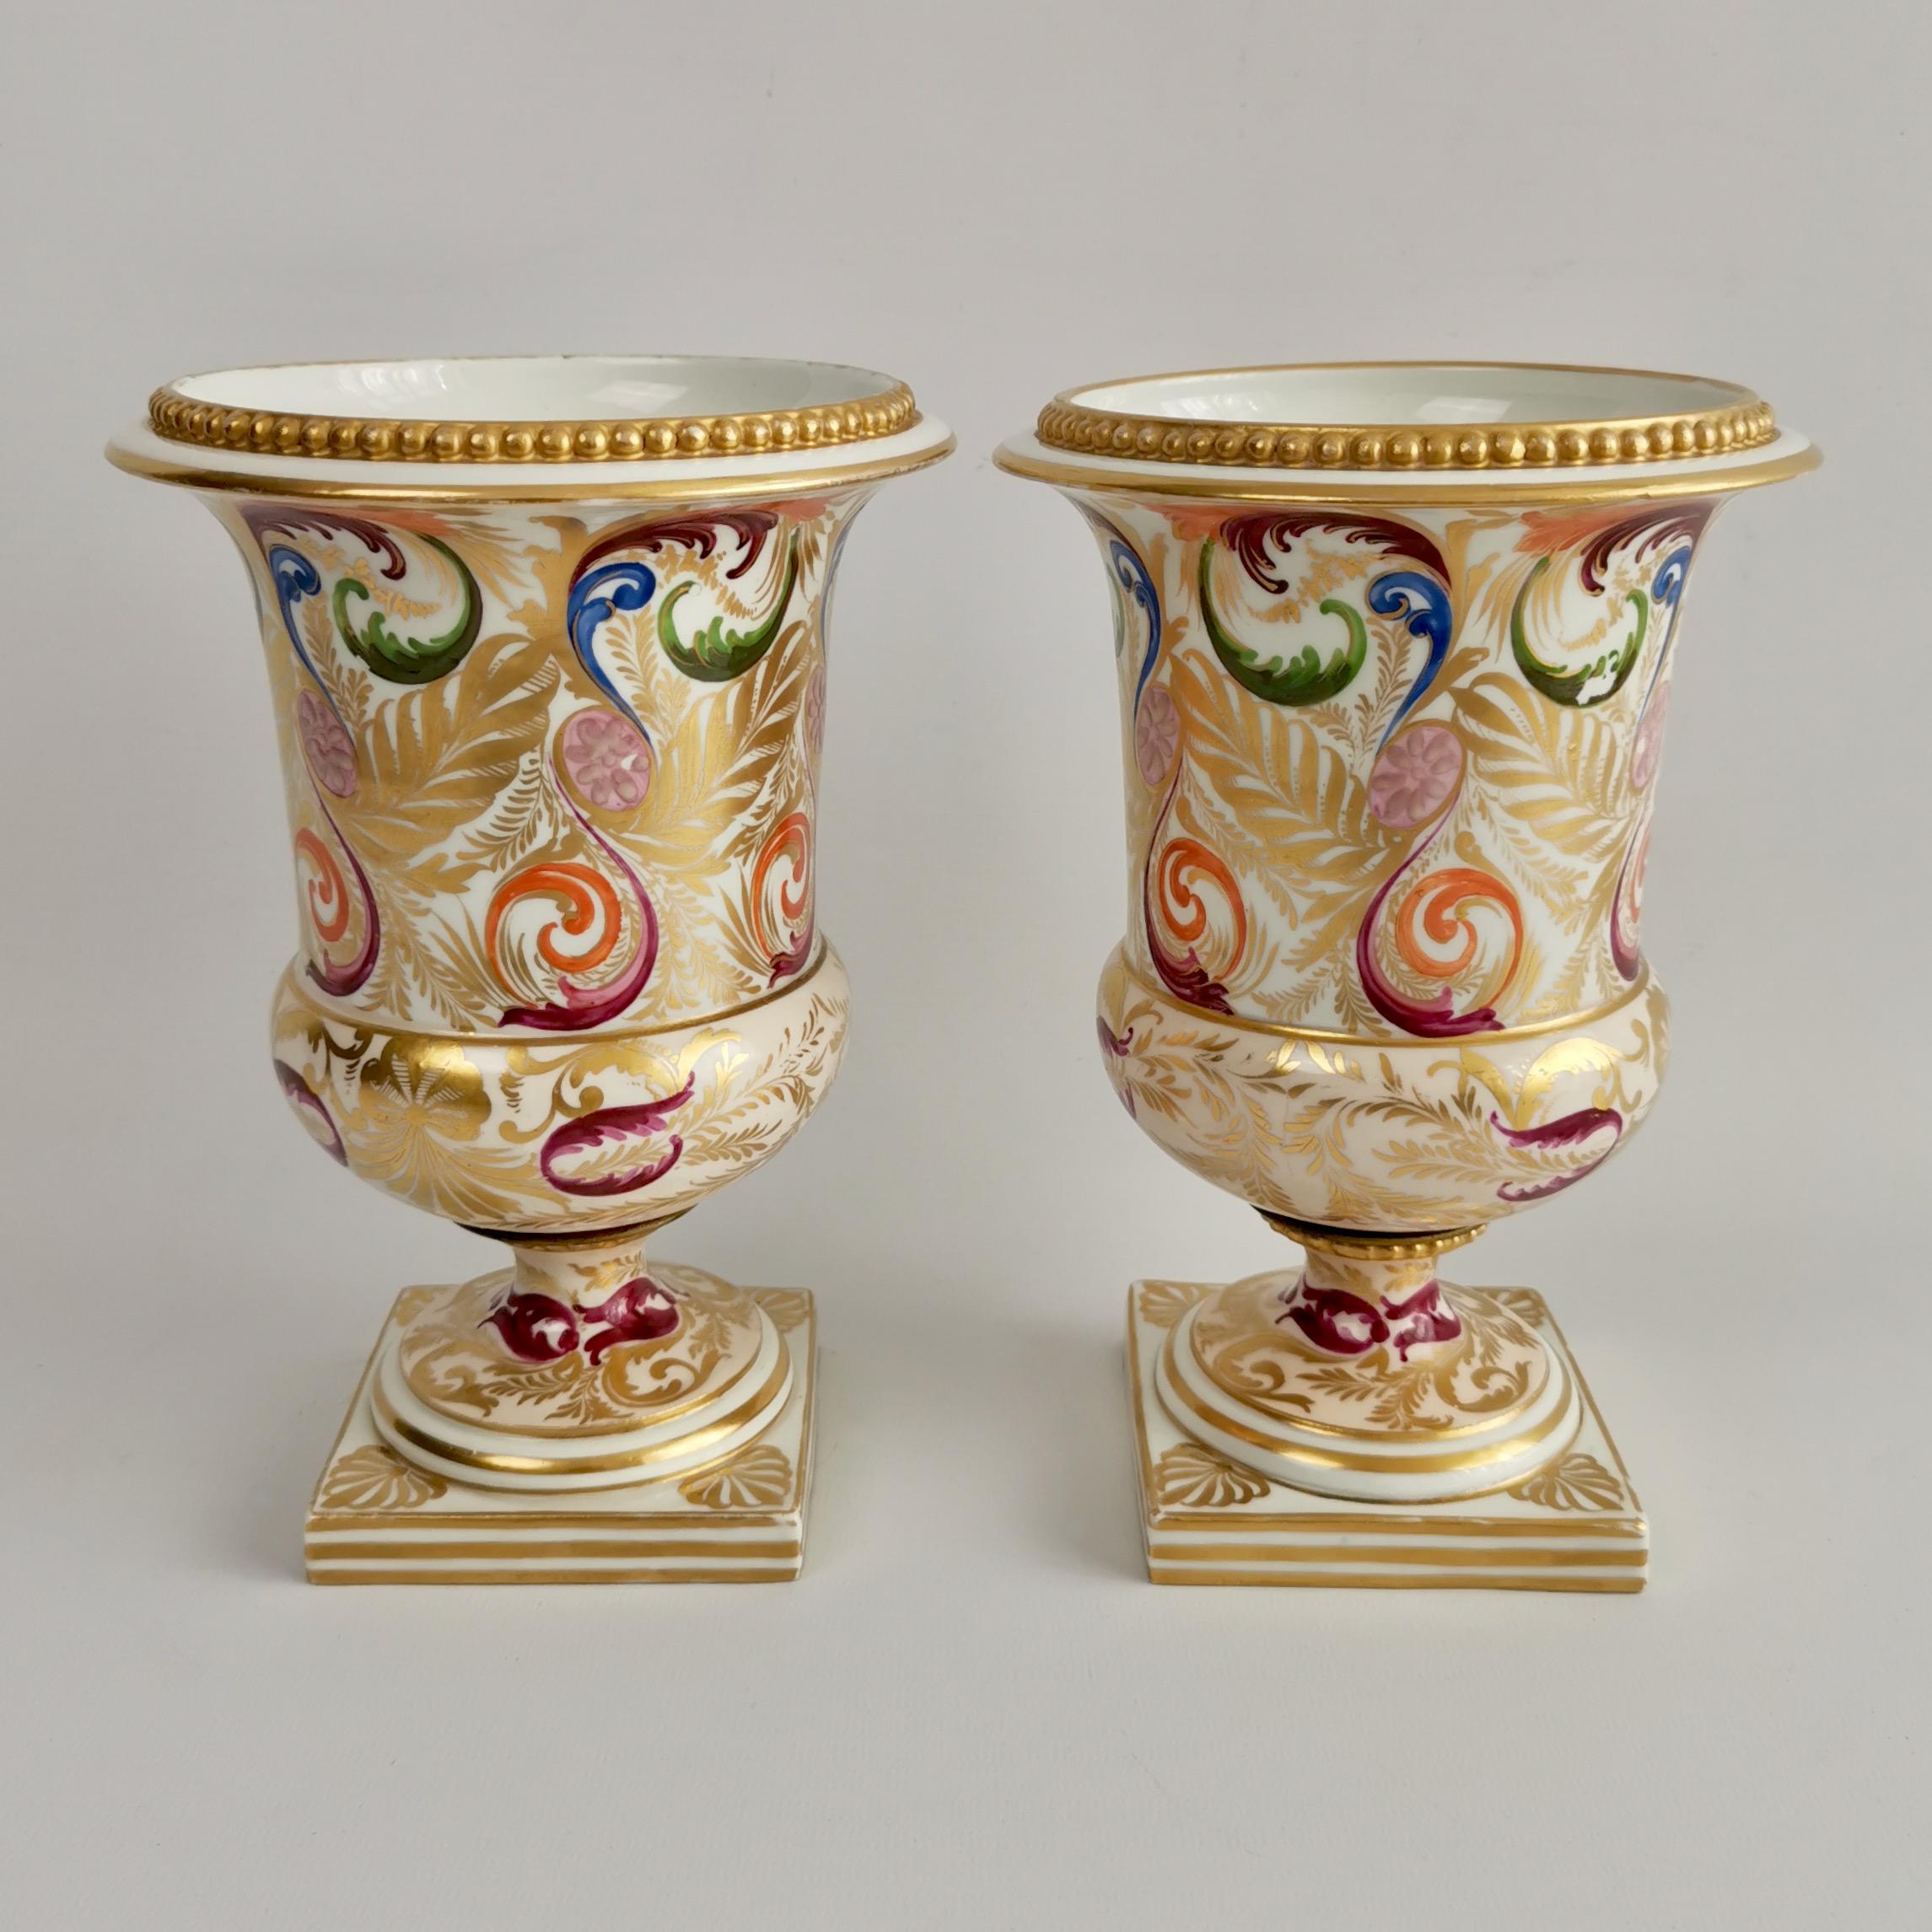 English Pair of Bloor Derby Porcelain Campana Vases, Polychrome Regency Pattern, ca 1815